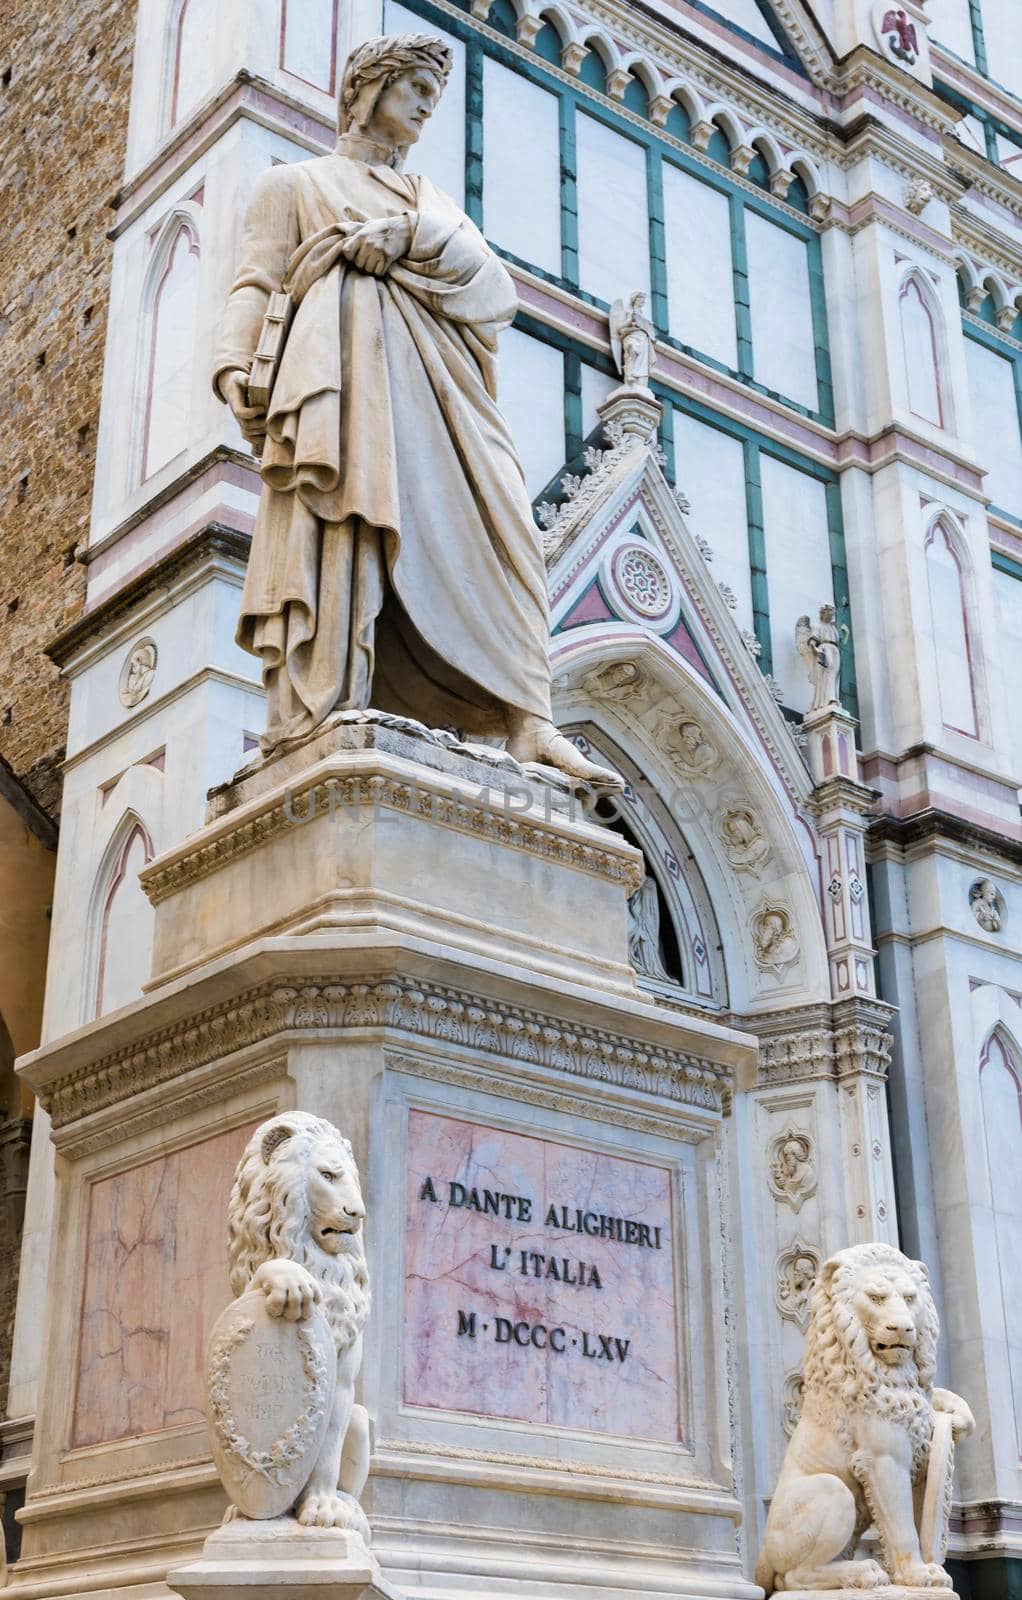 Dante Alighieri statue in Florence, Tuscany region, Italy.